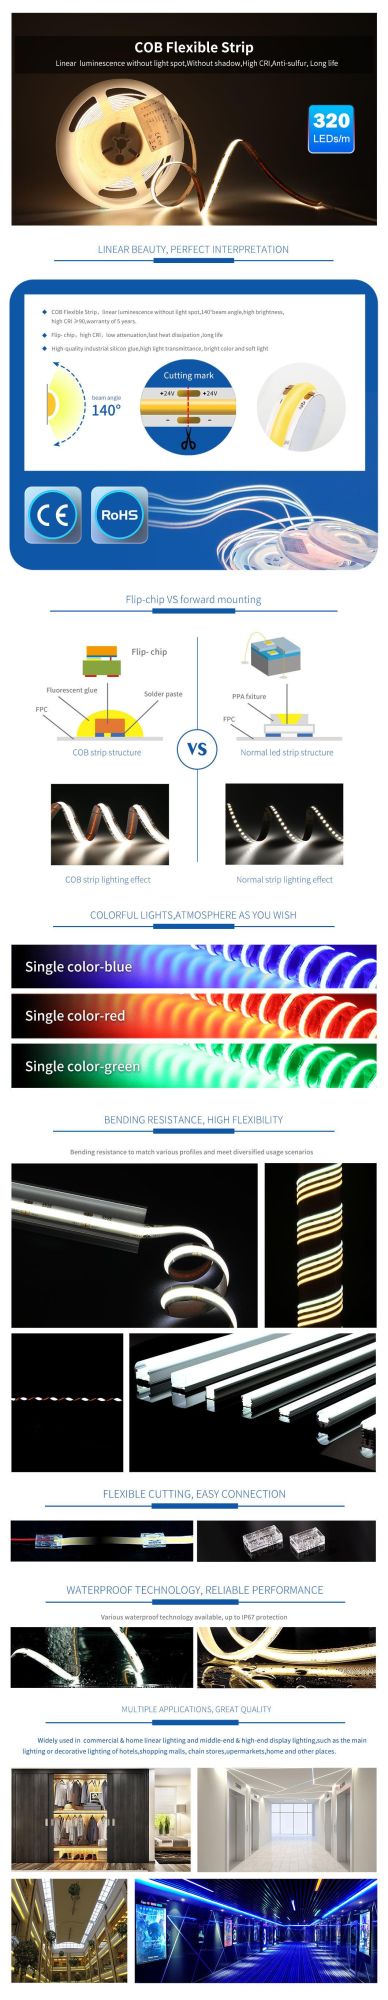 RGB Rishang Decoration COB LED Lighting LED Strip Light